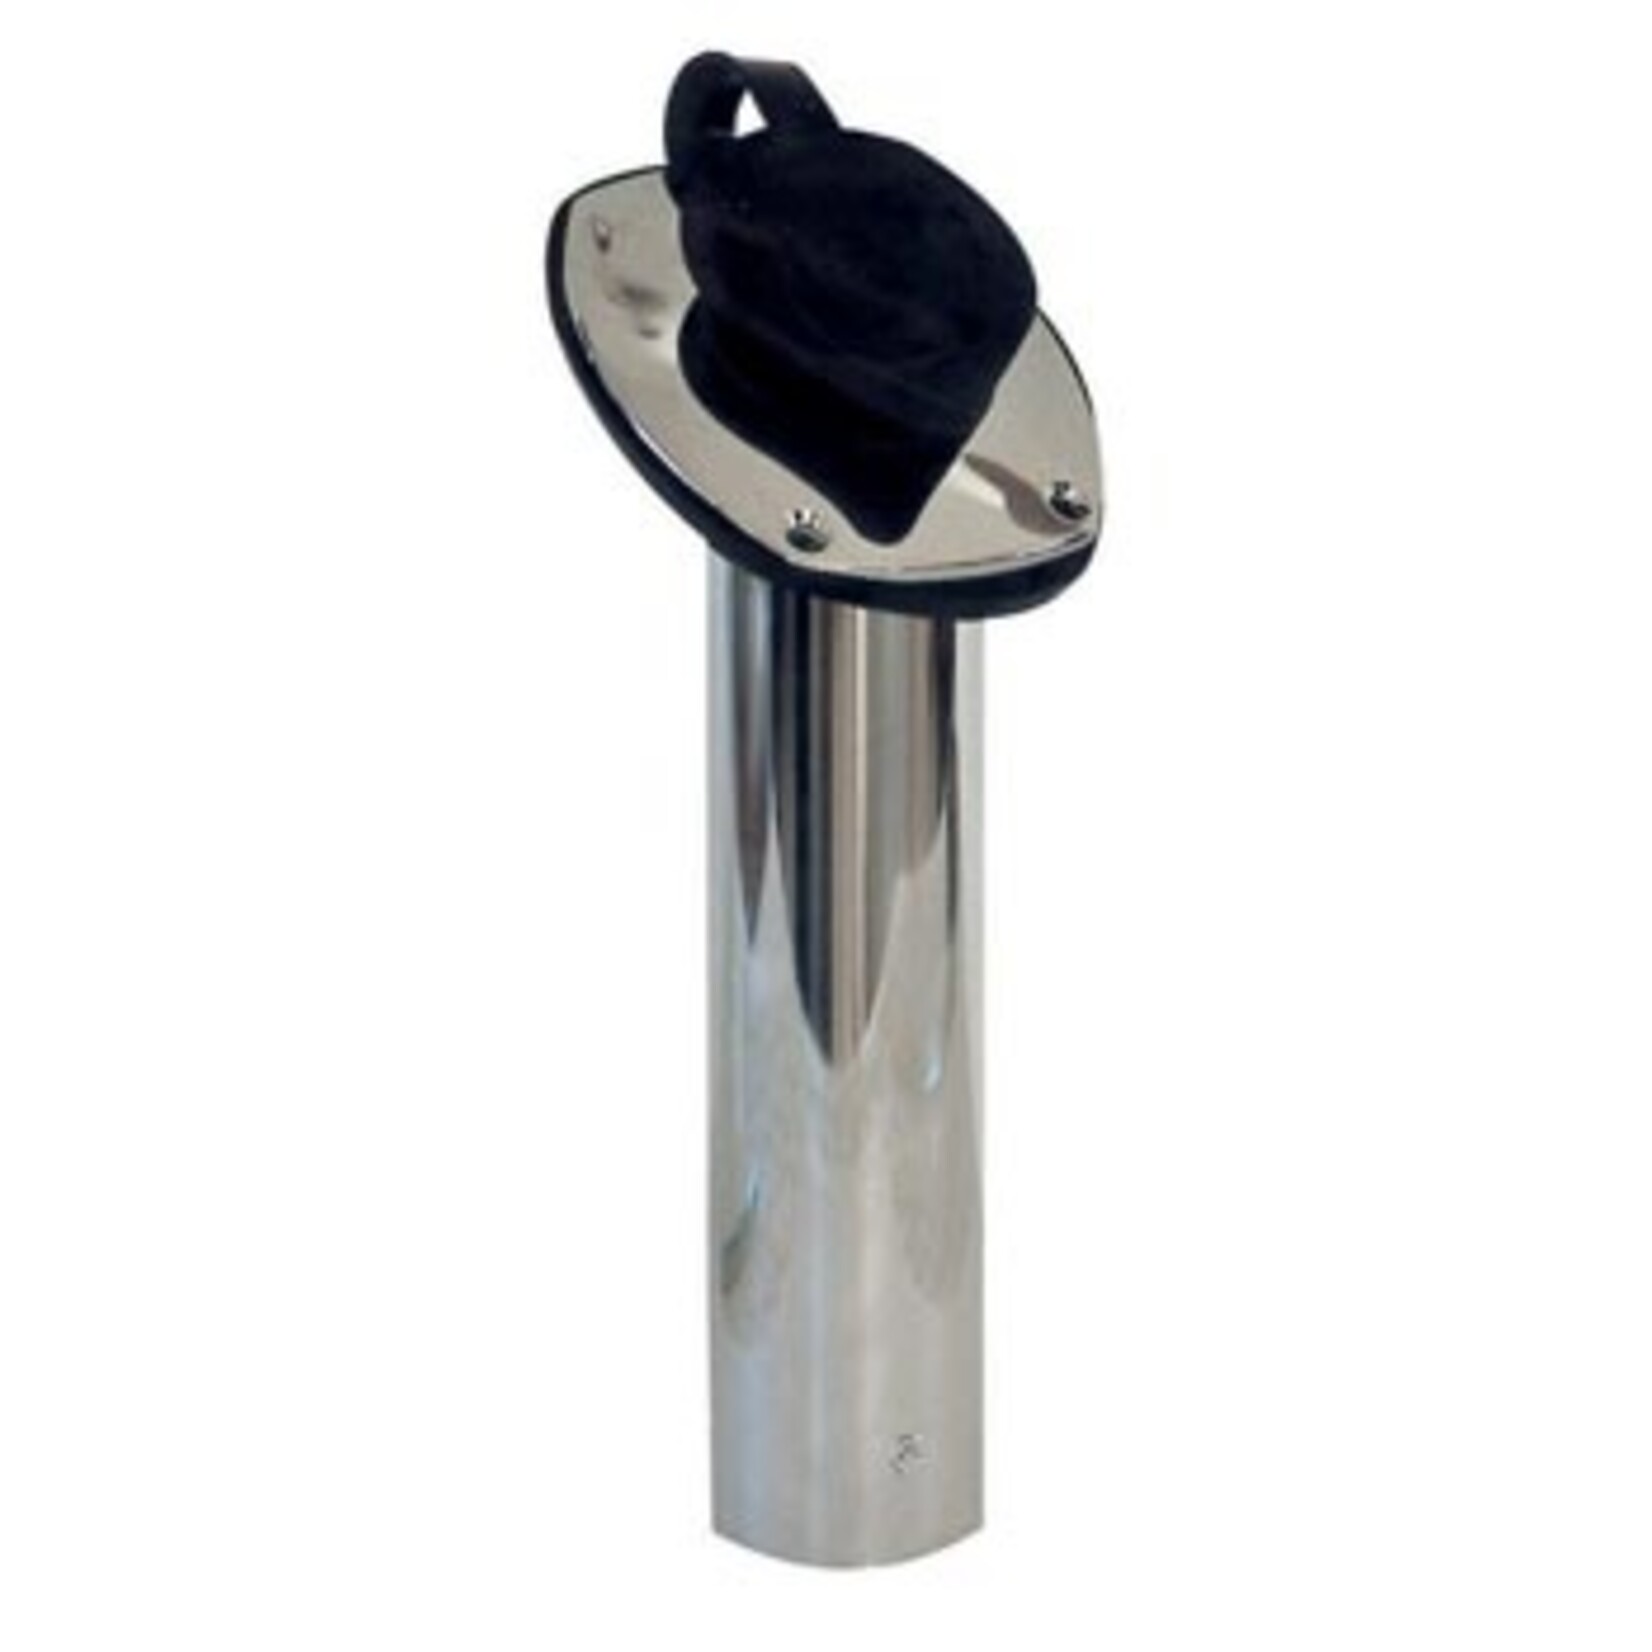 Plastimo Rodholder chr angled flush mount c/w cap